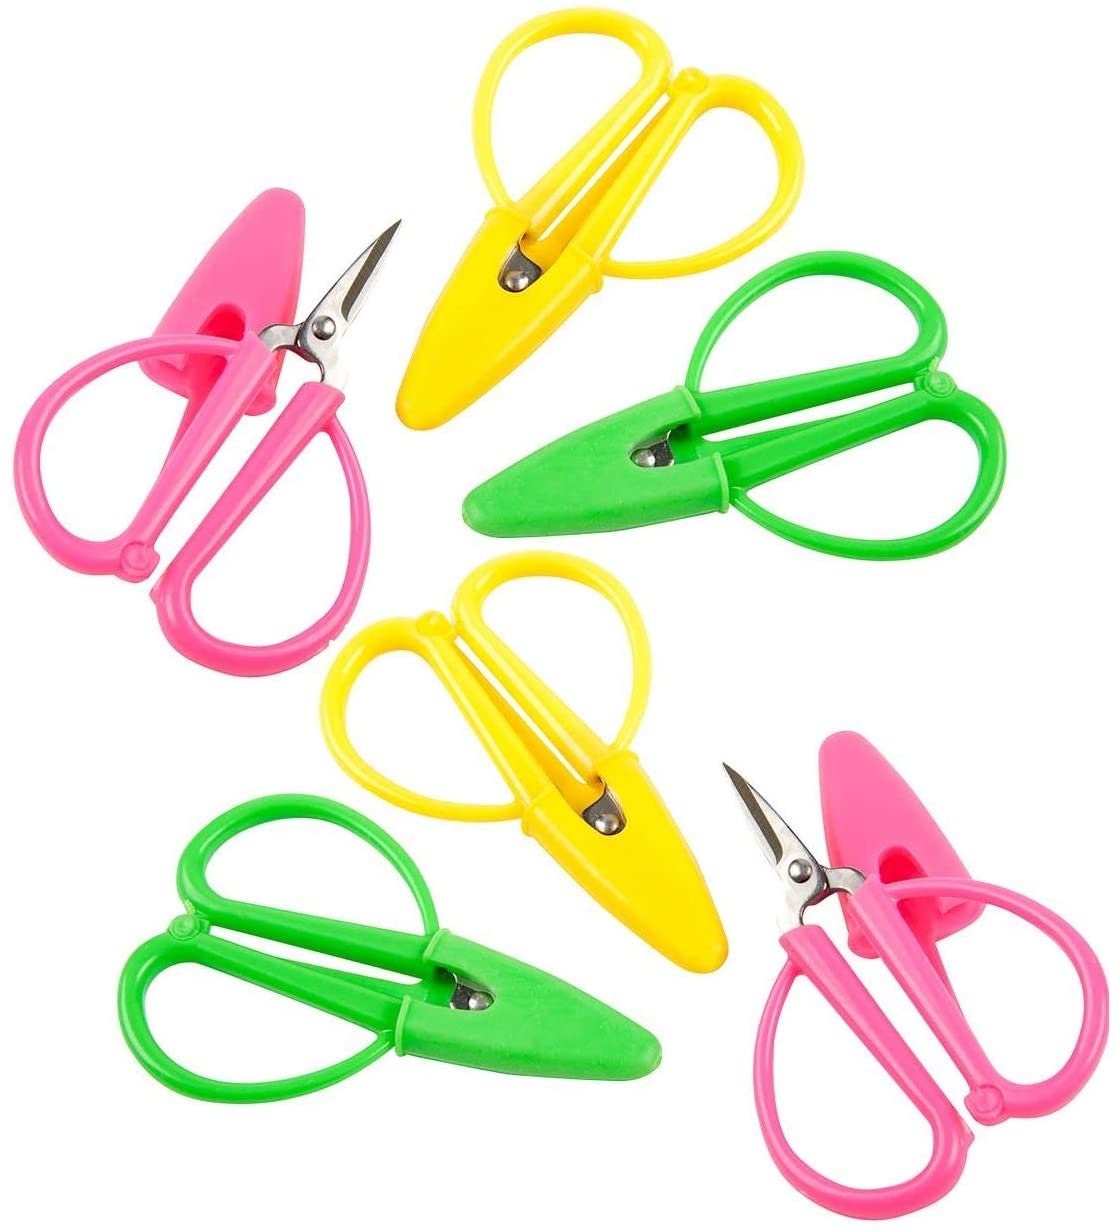 Pastel Mini Folding Scissors – The Flying Needles